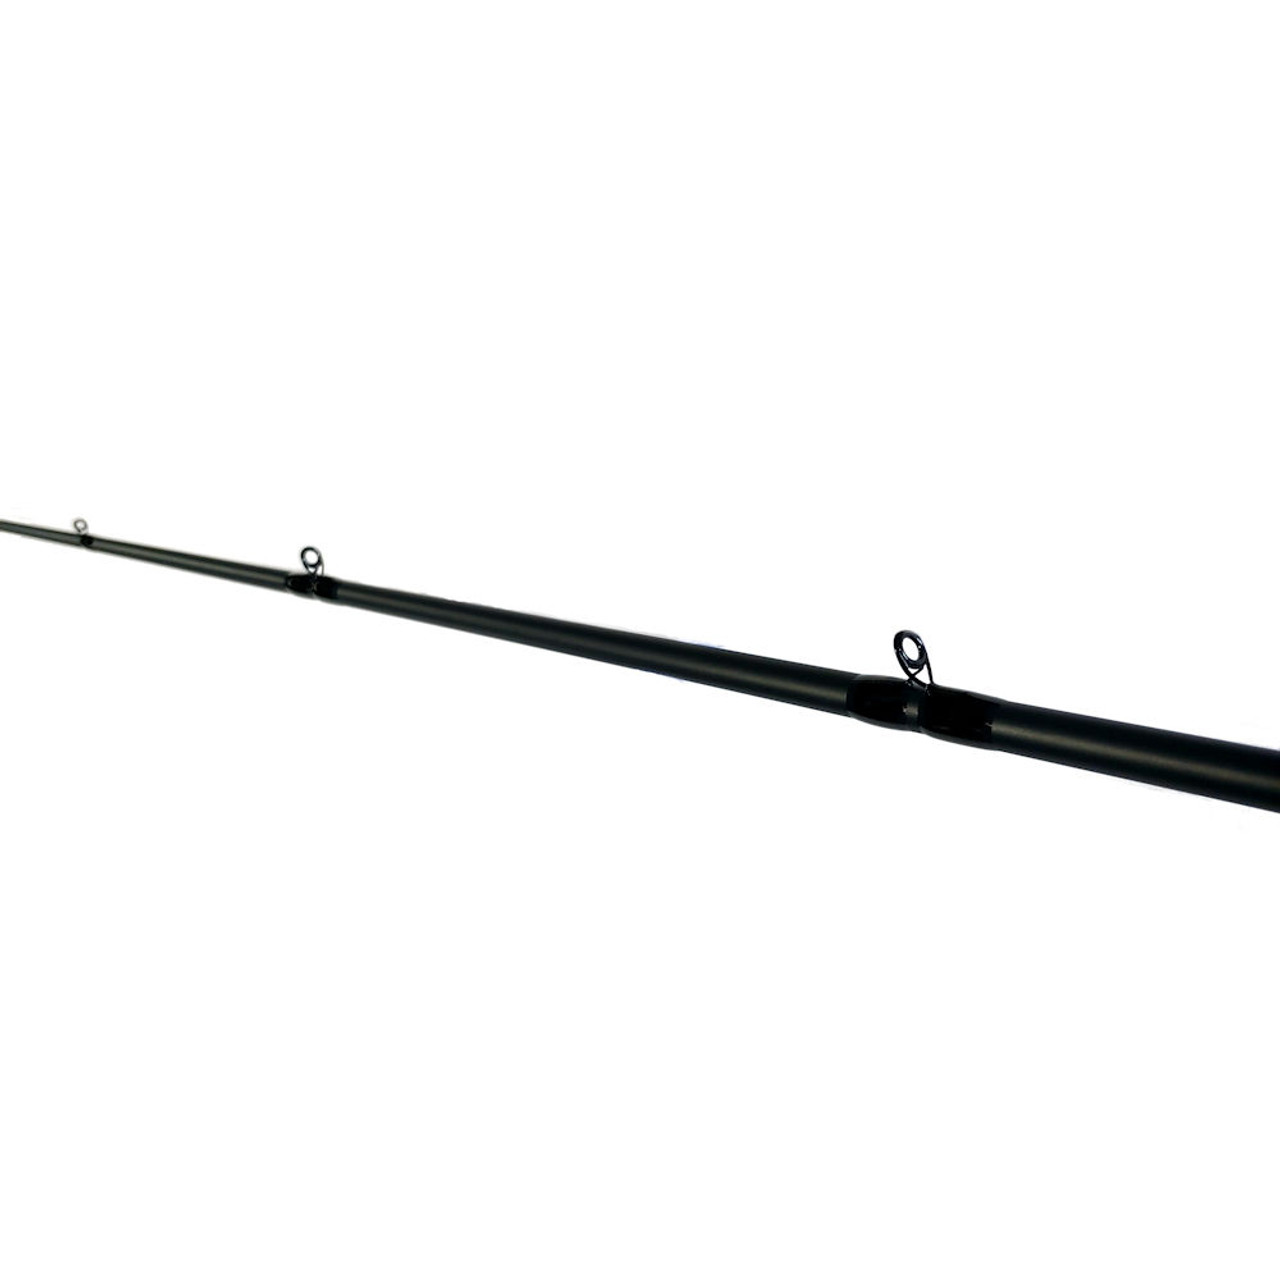 6'6 Medium Casting Rod  Impulse Bass Fishing Rods